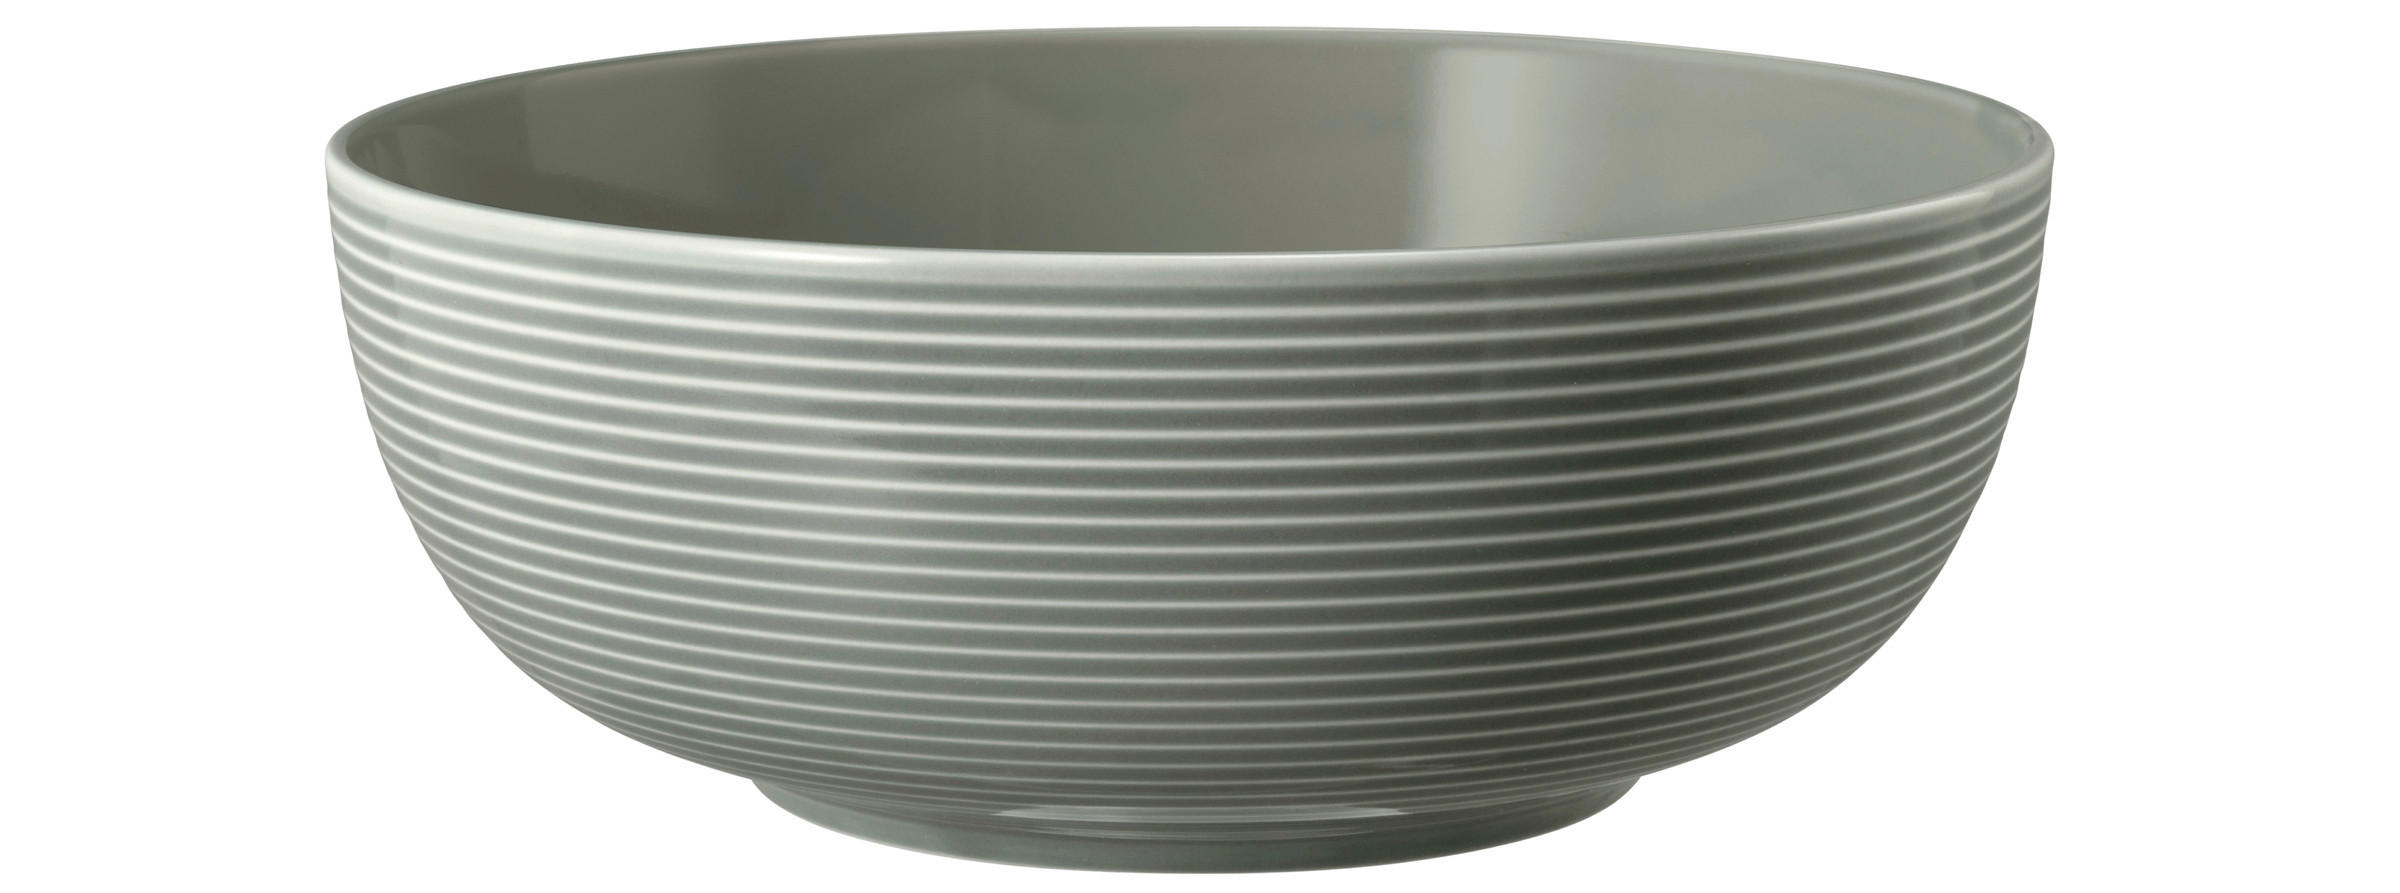 SCHÜSSEL Keramik Porzellan  - Grau, Basics, Keramik (25/25/10cm) - Seltmann Weiden